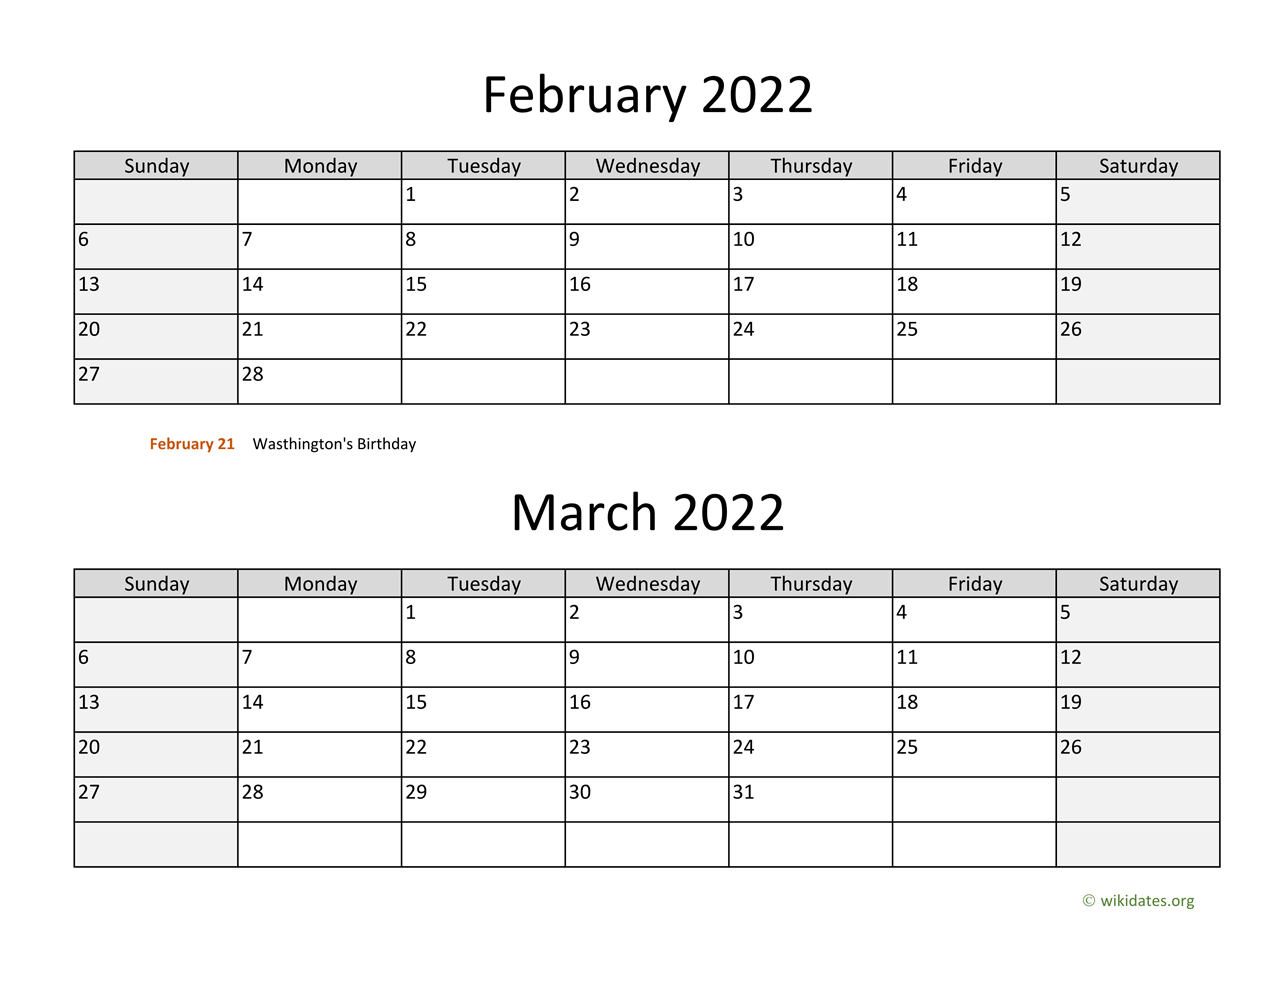 Feb March 2022 Calendar February And March 2022 Calendar | Wikidates.org